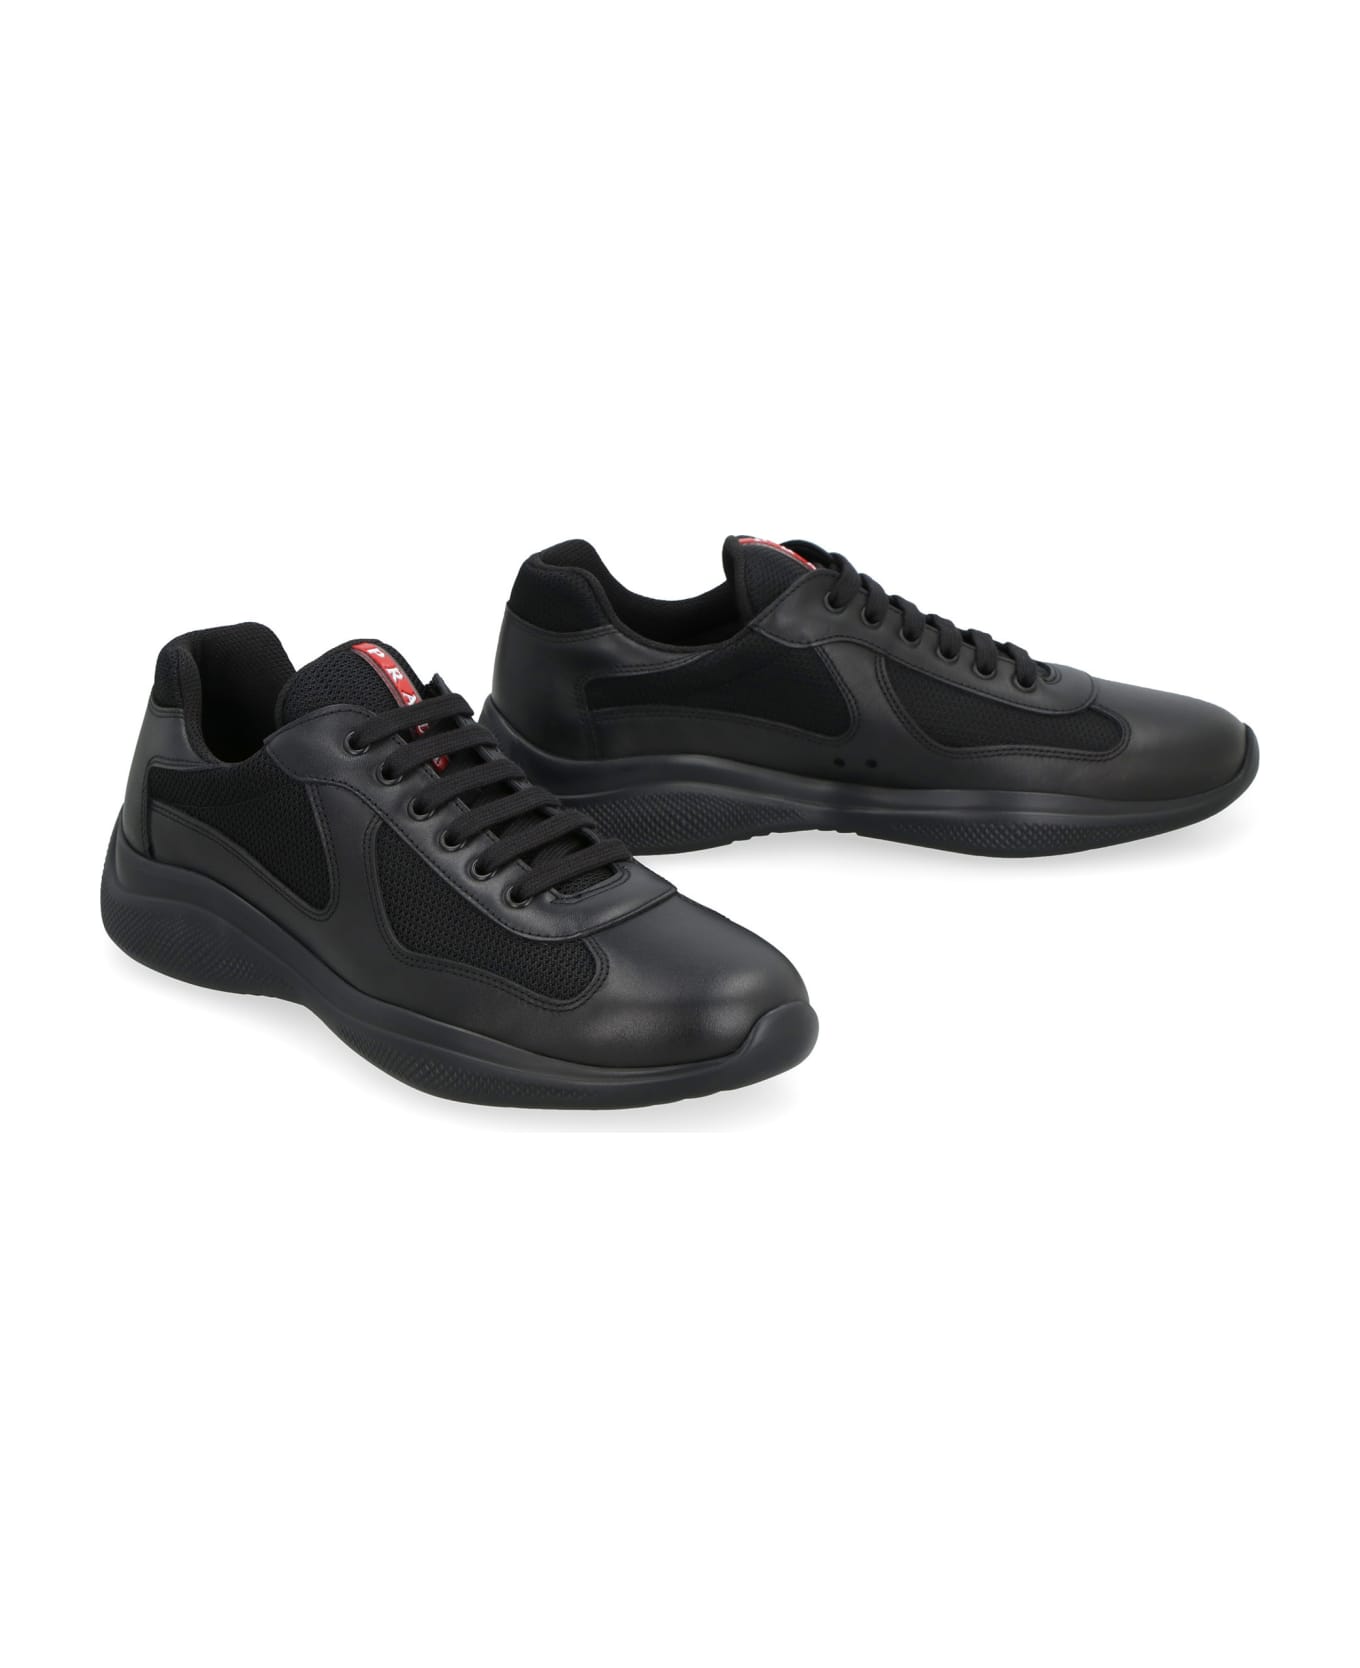 Prada America's Cup Leather Sneakers - Nero